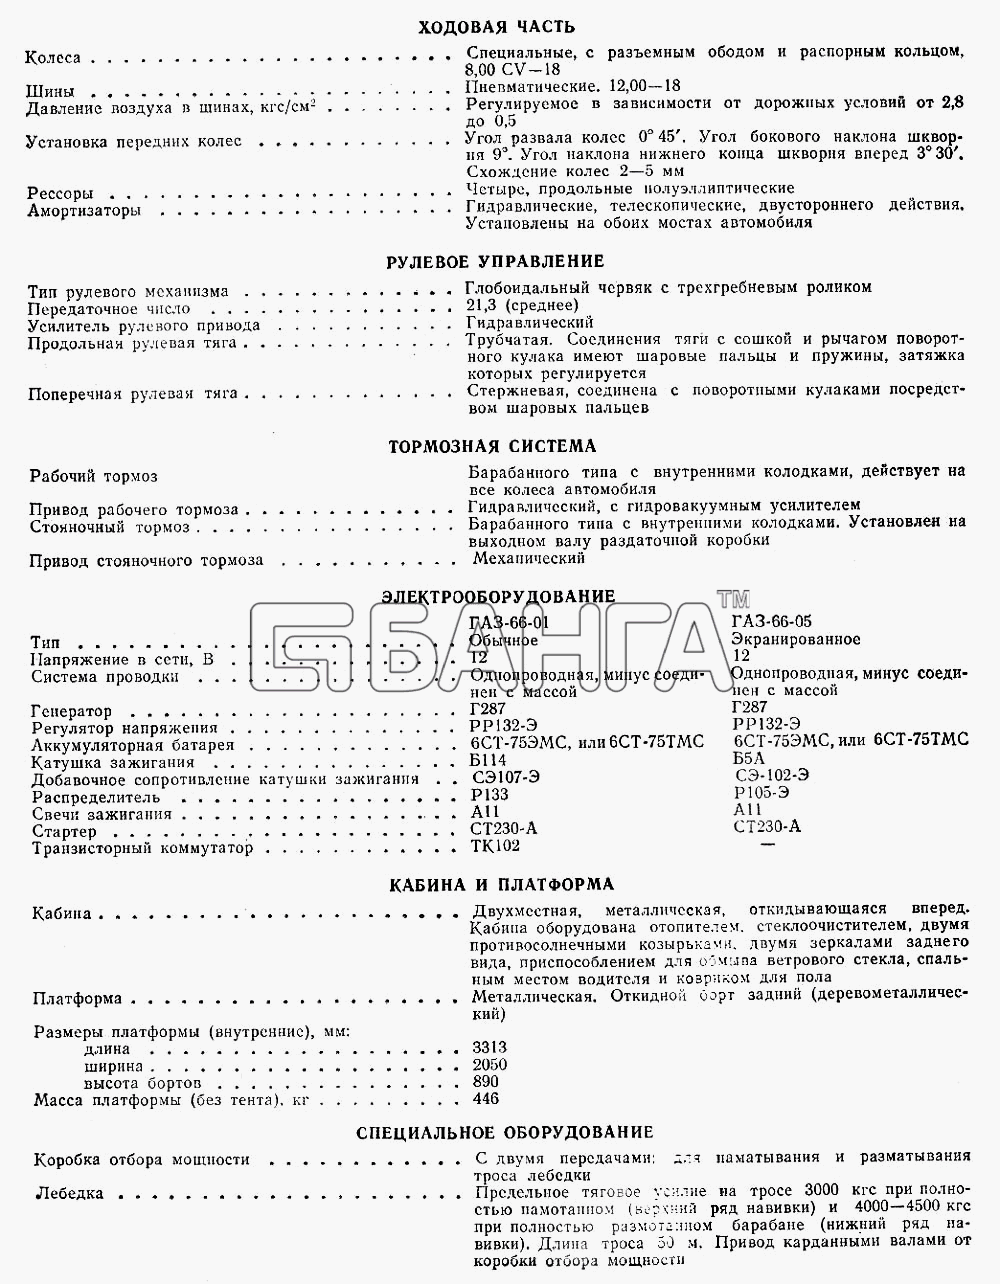 ГАЗ ГАЗ-66 (Каталог 1983 г.) Схема Лист 3 banga.ua